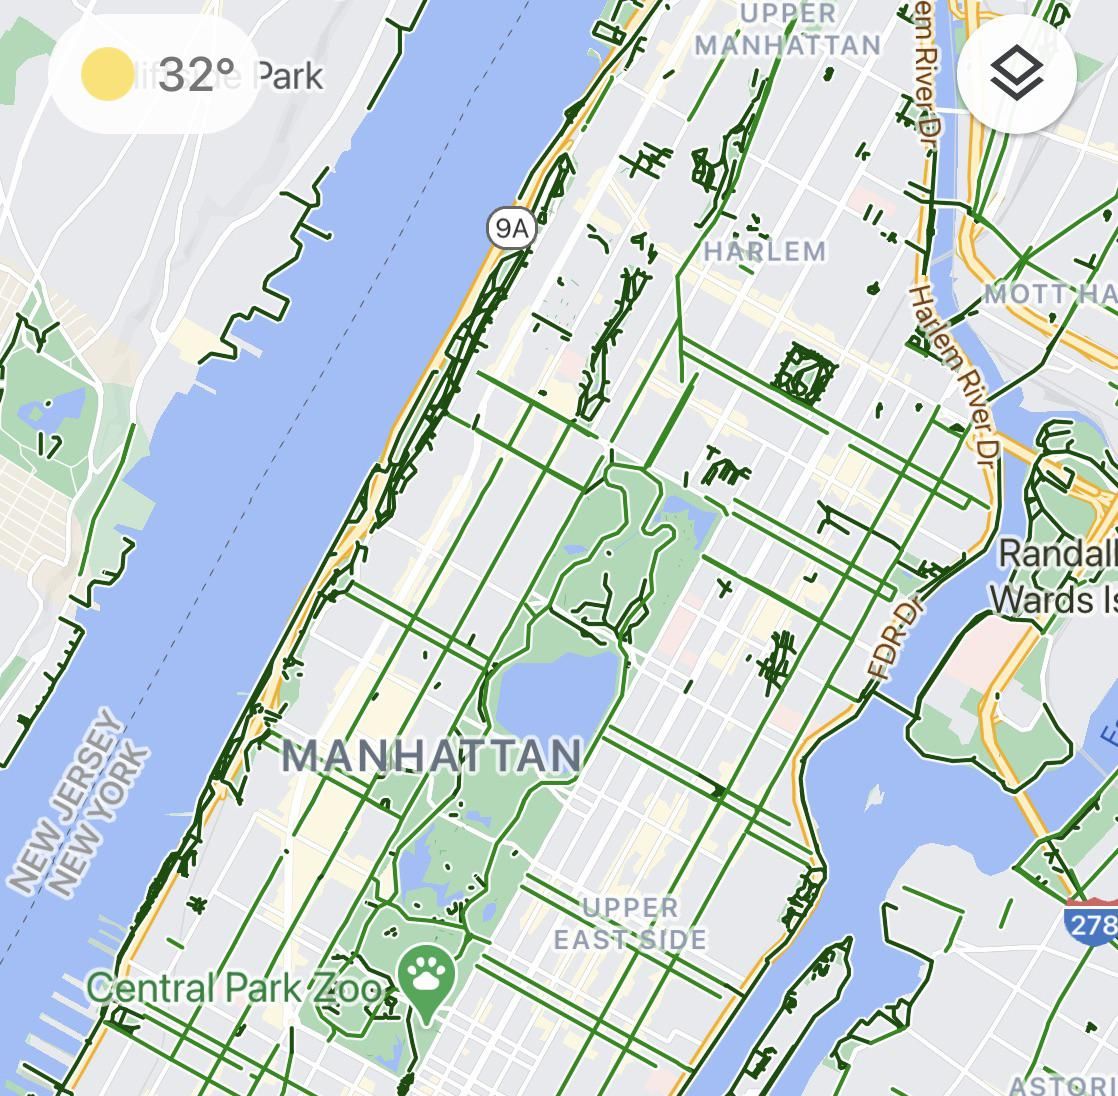 Google Maps of Manhattan